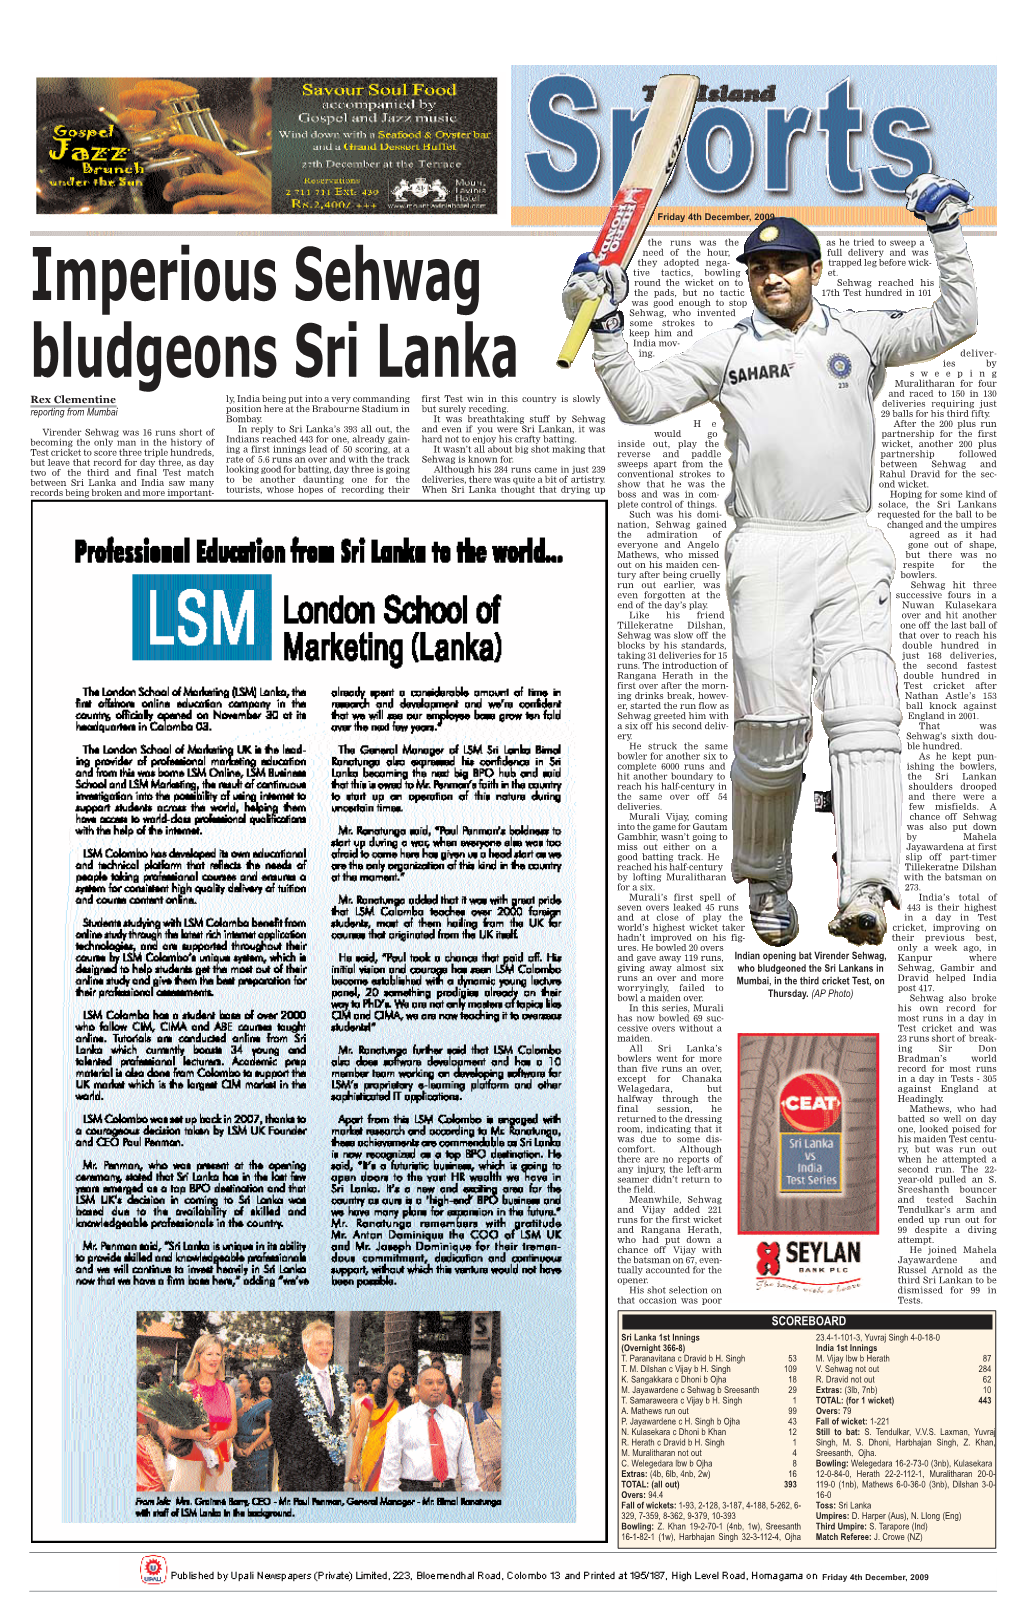 Imperious Sehwag Bludgeons Sri Lanka